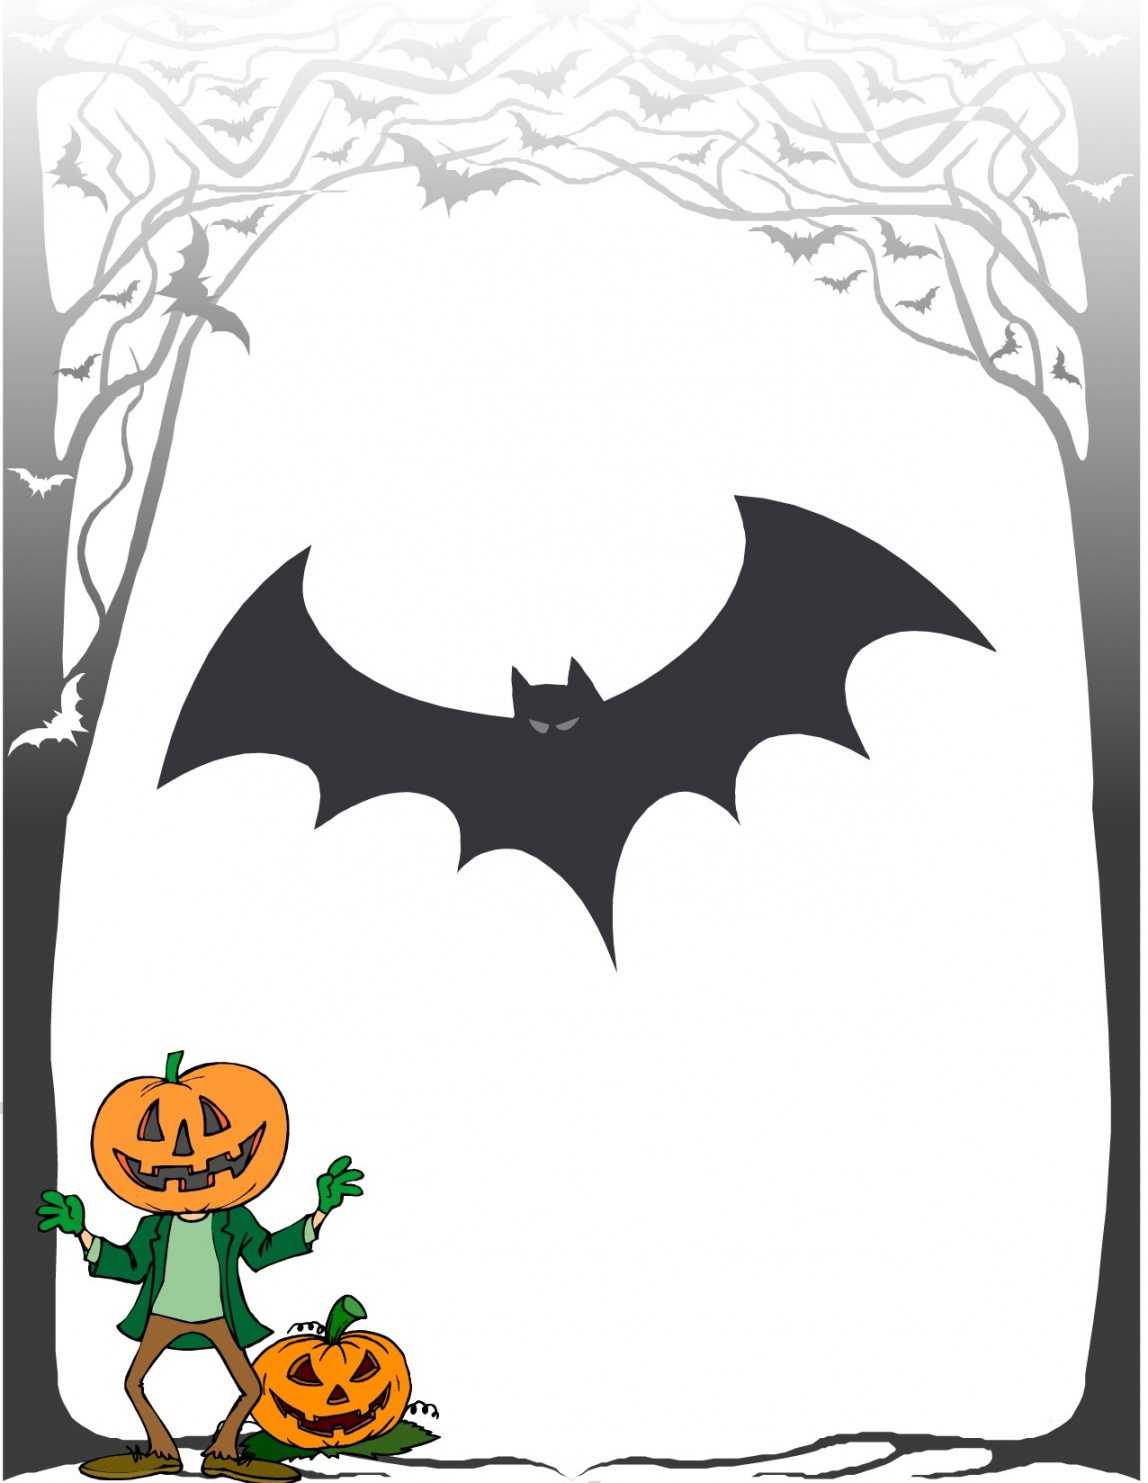 Editable Halloween Award Certificate Maker Costume Contest With Halloween Costume Certificate Template